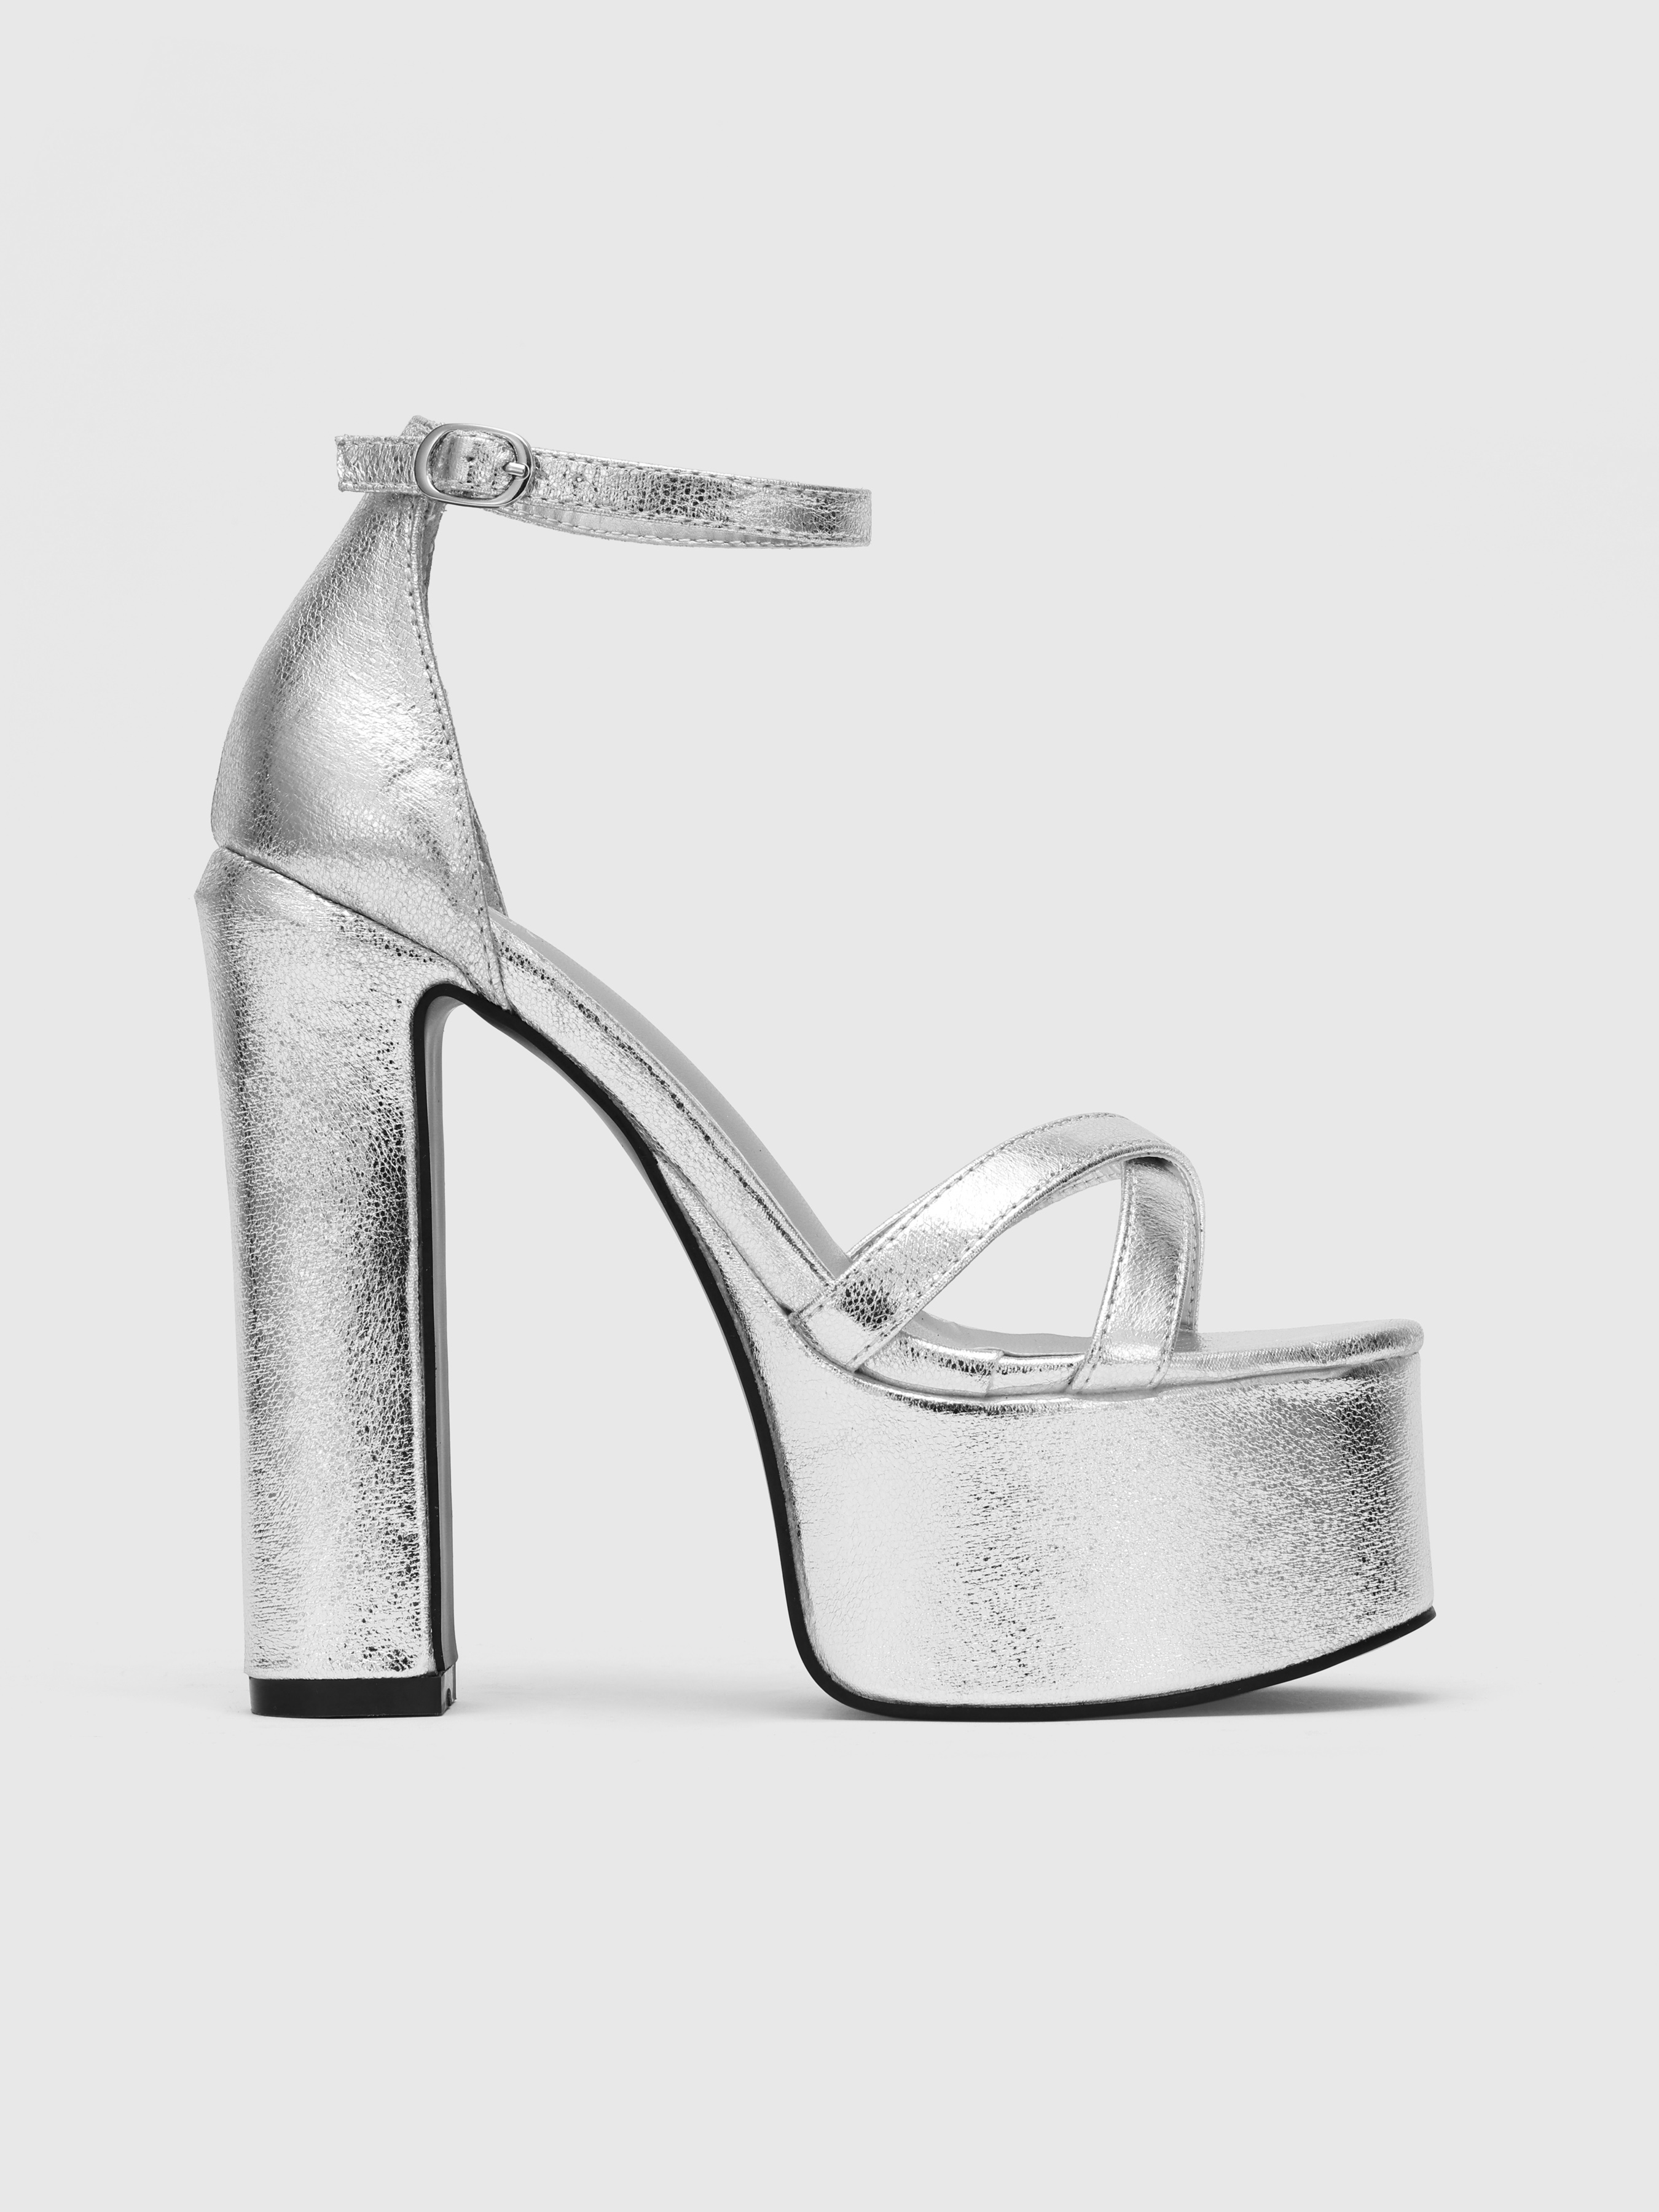 Giaro KIANNI LIQUID SILVER - Giaro High Heels | Official store - All Vegan  High Heels